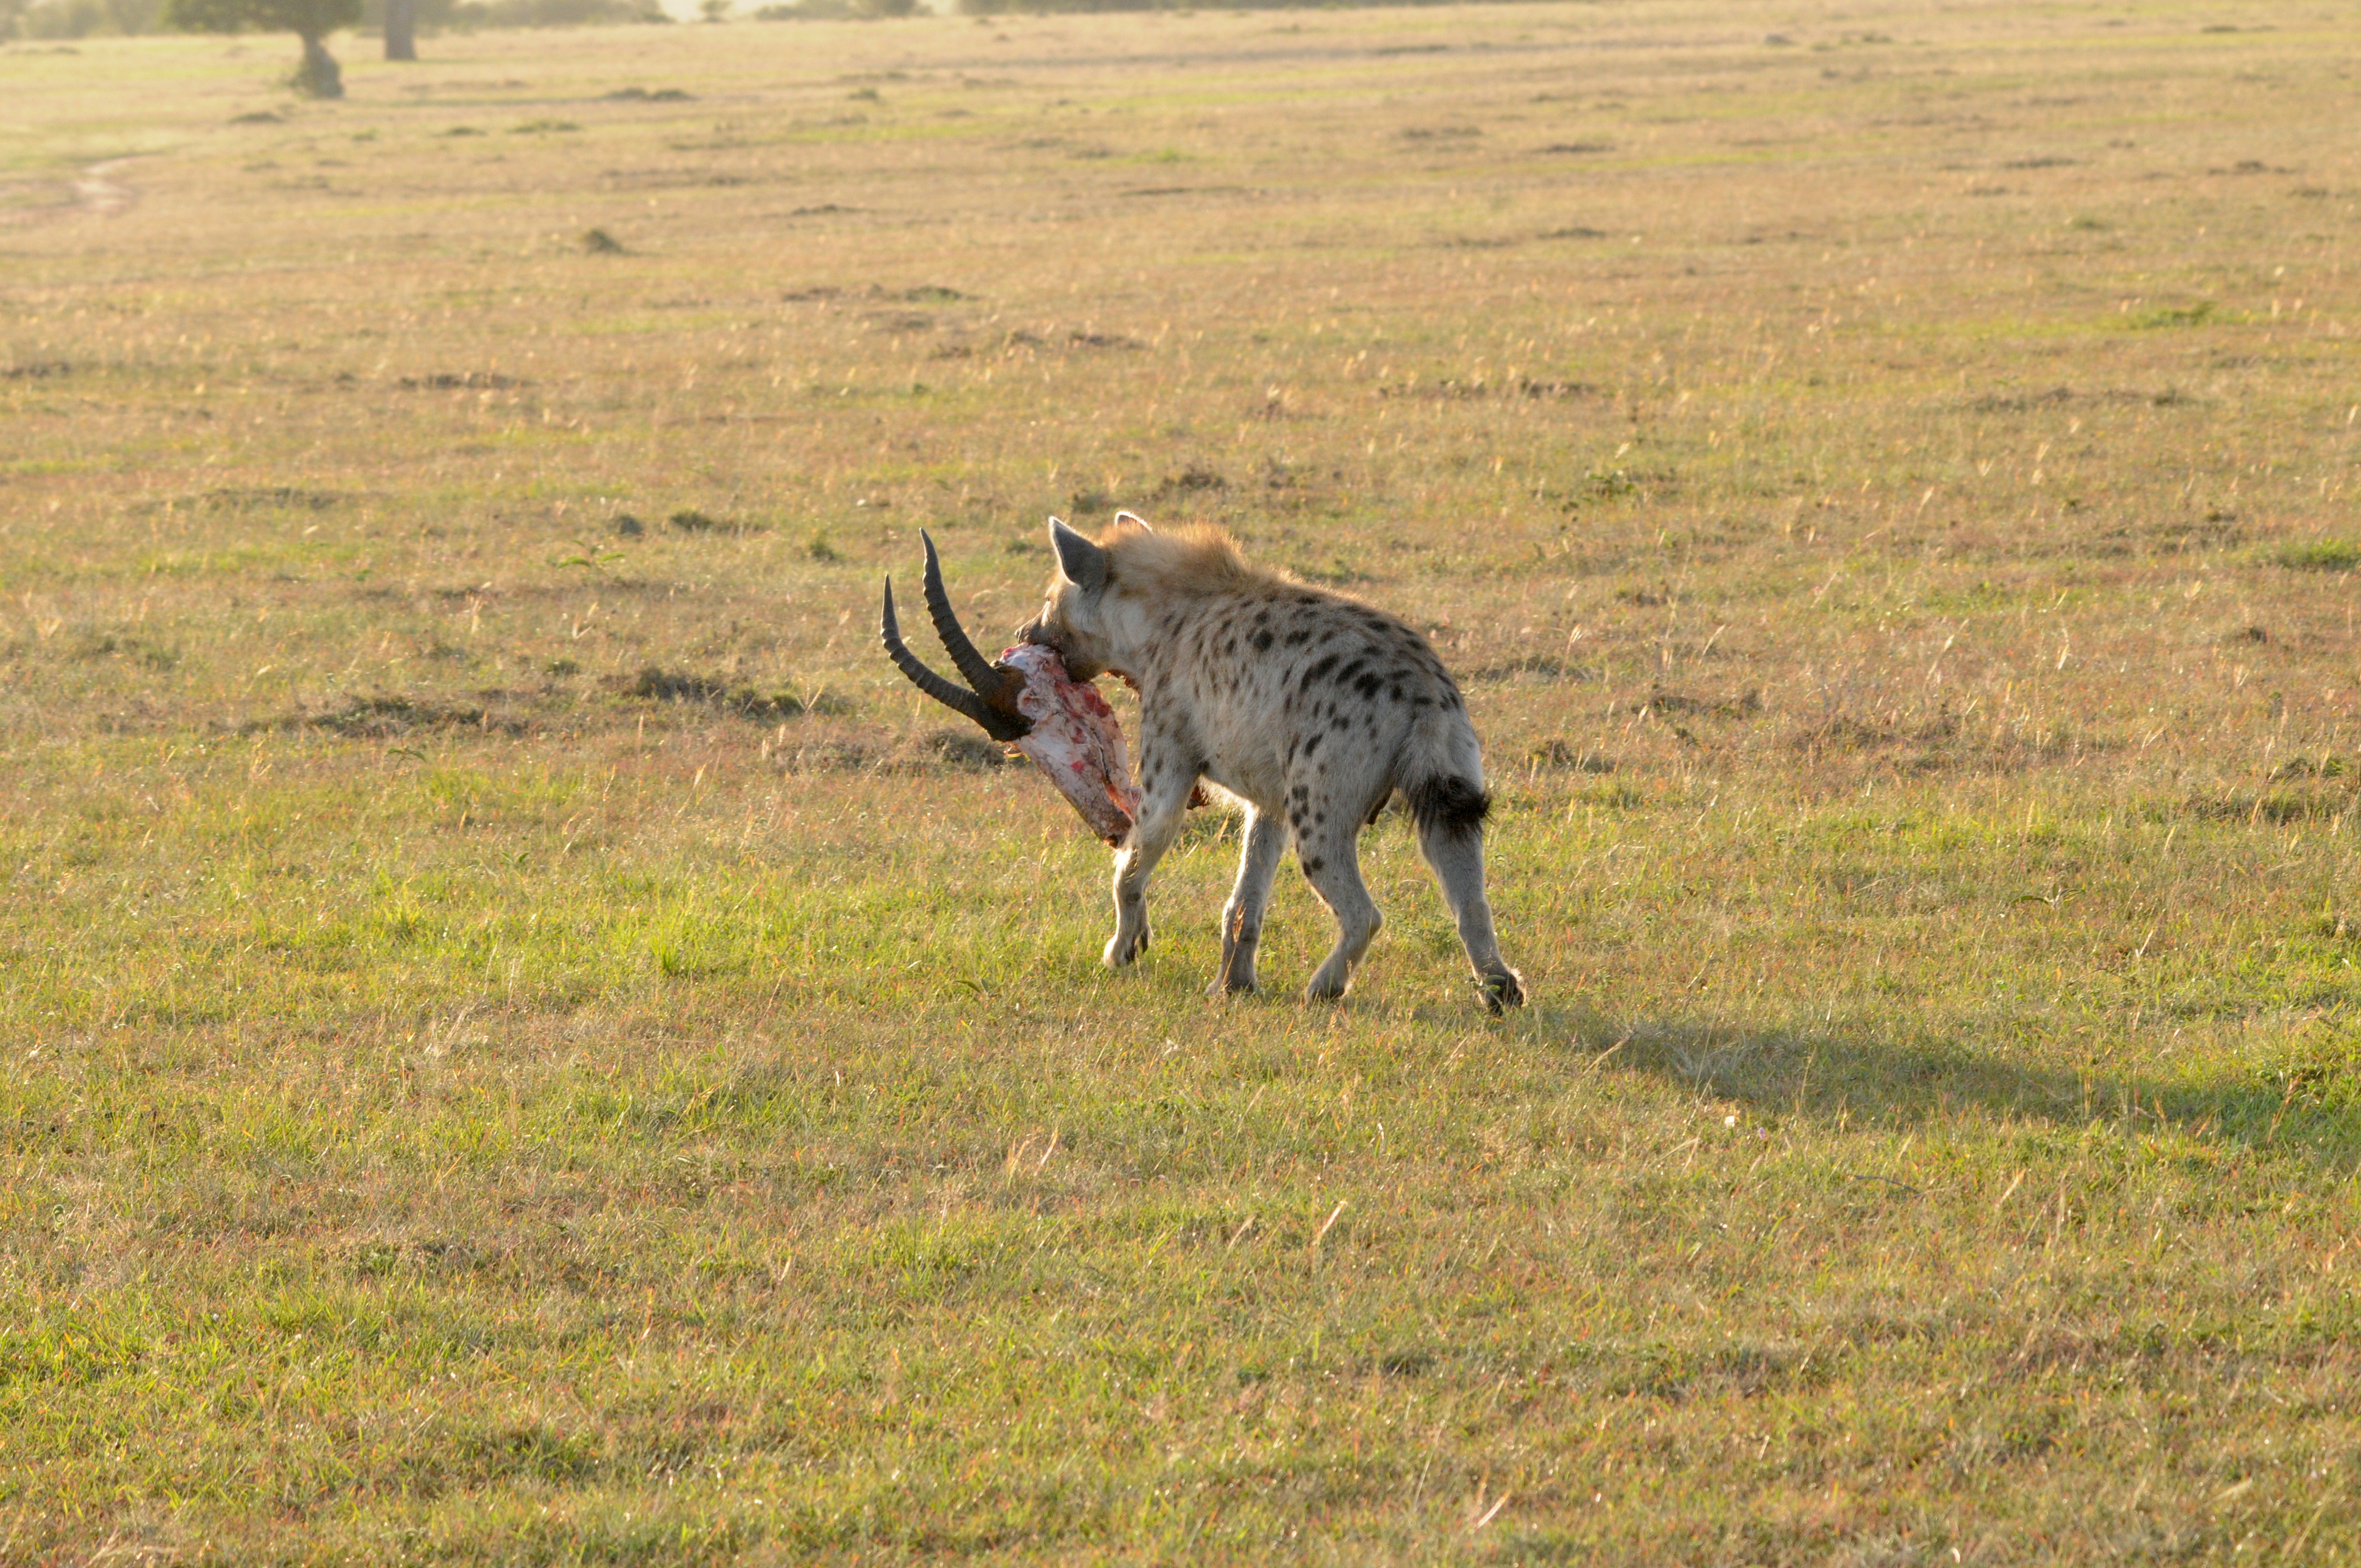 Adult hyena carrying a topi skull (Photo credit: Matthew Farr)